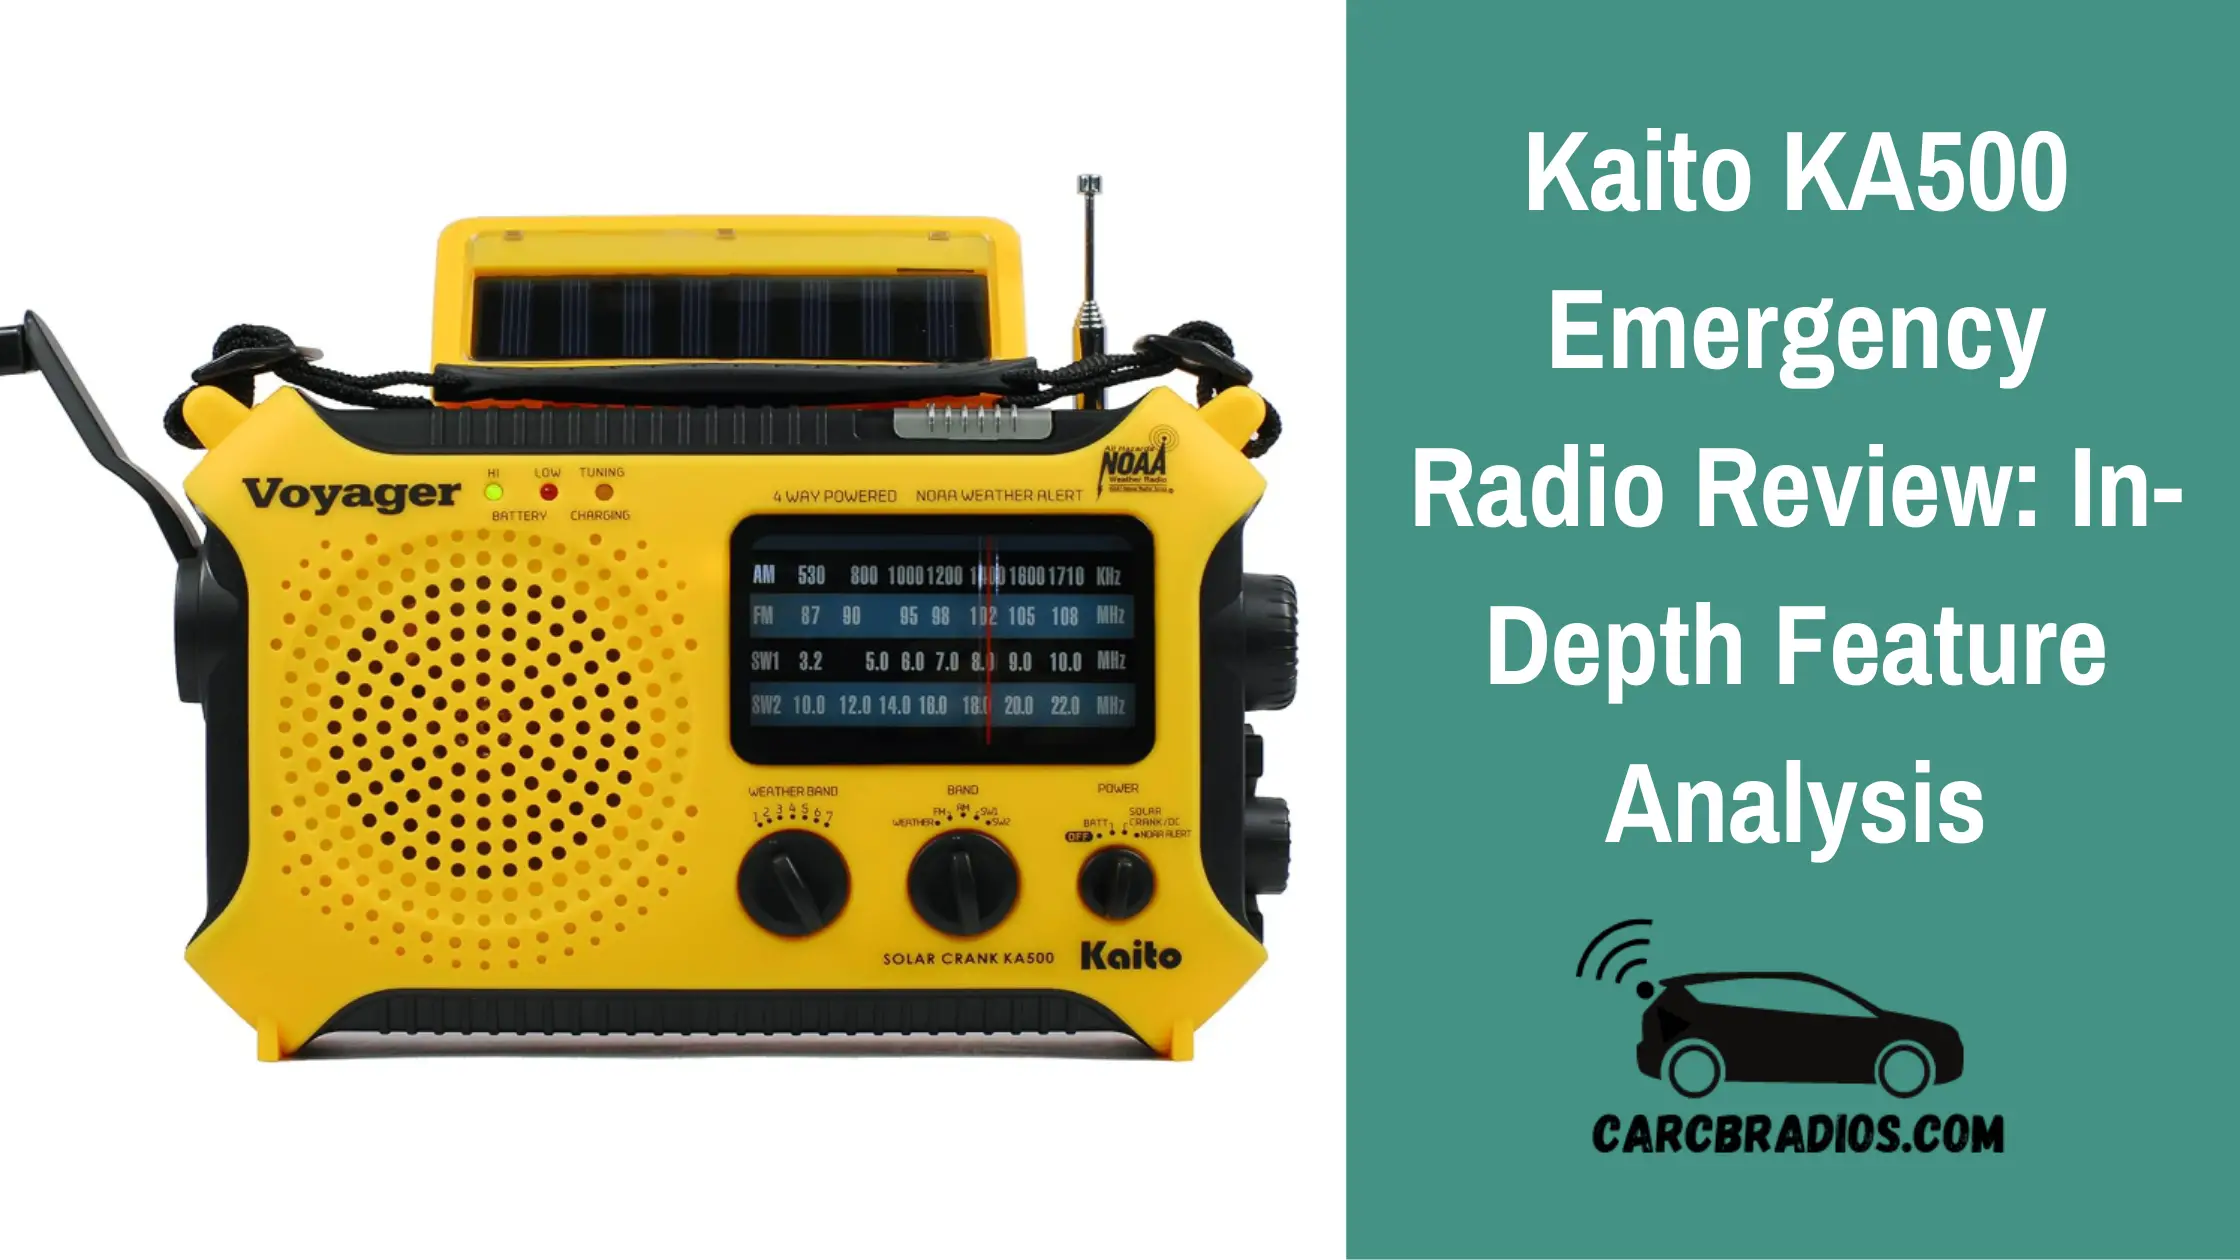 Kaito KA500 Emergency Radio Review: In-Depth Feature Analysis